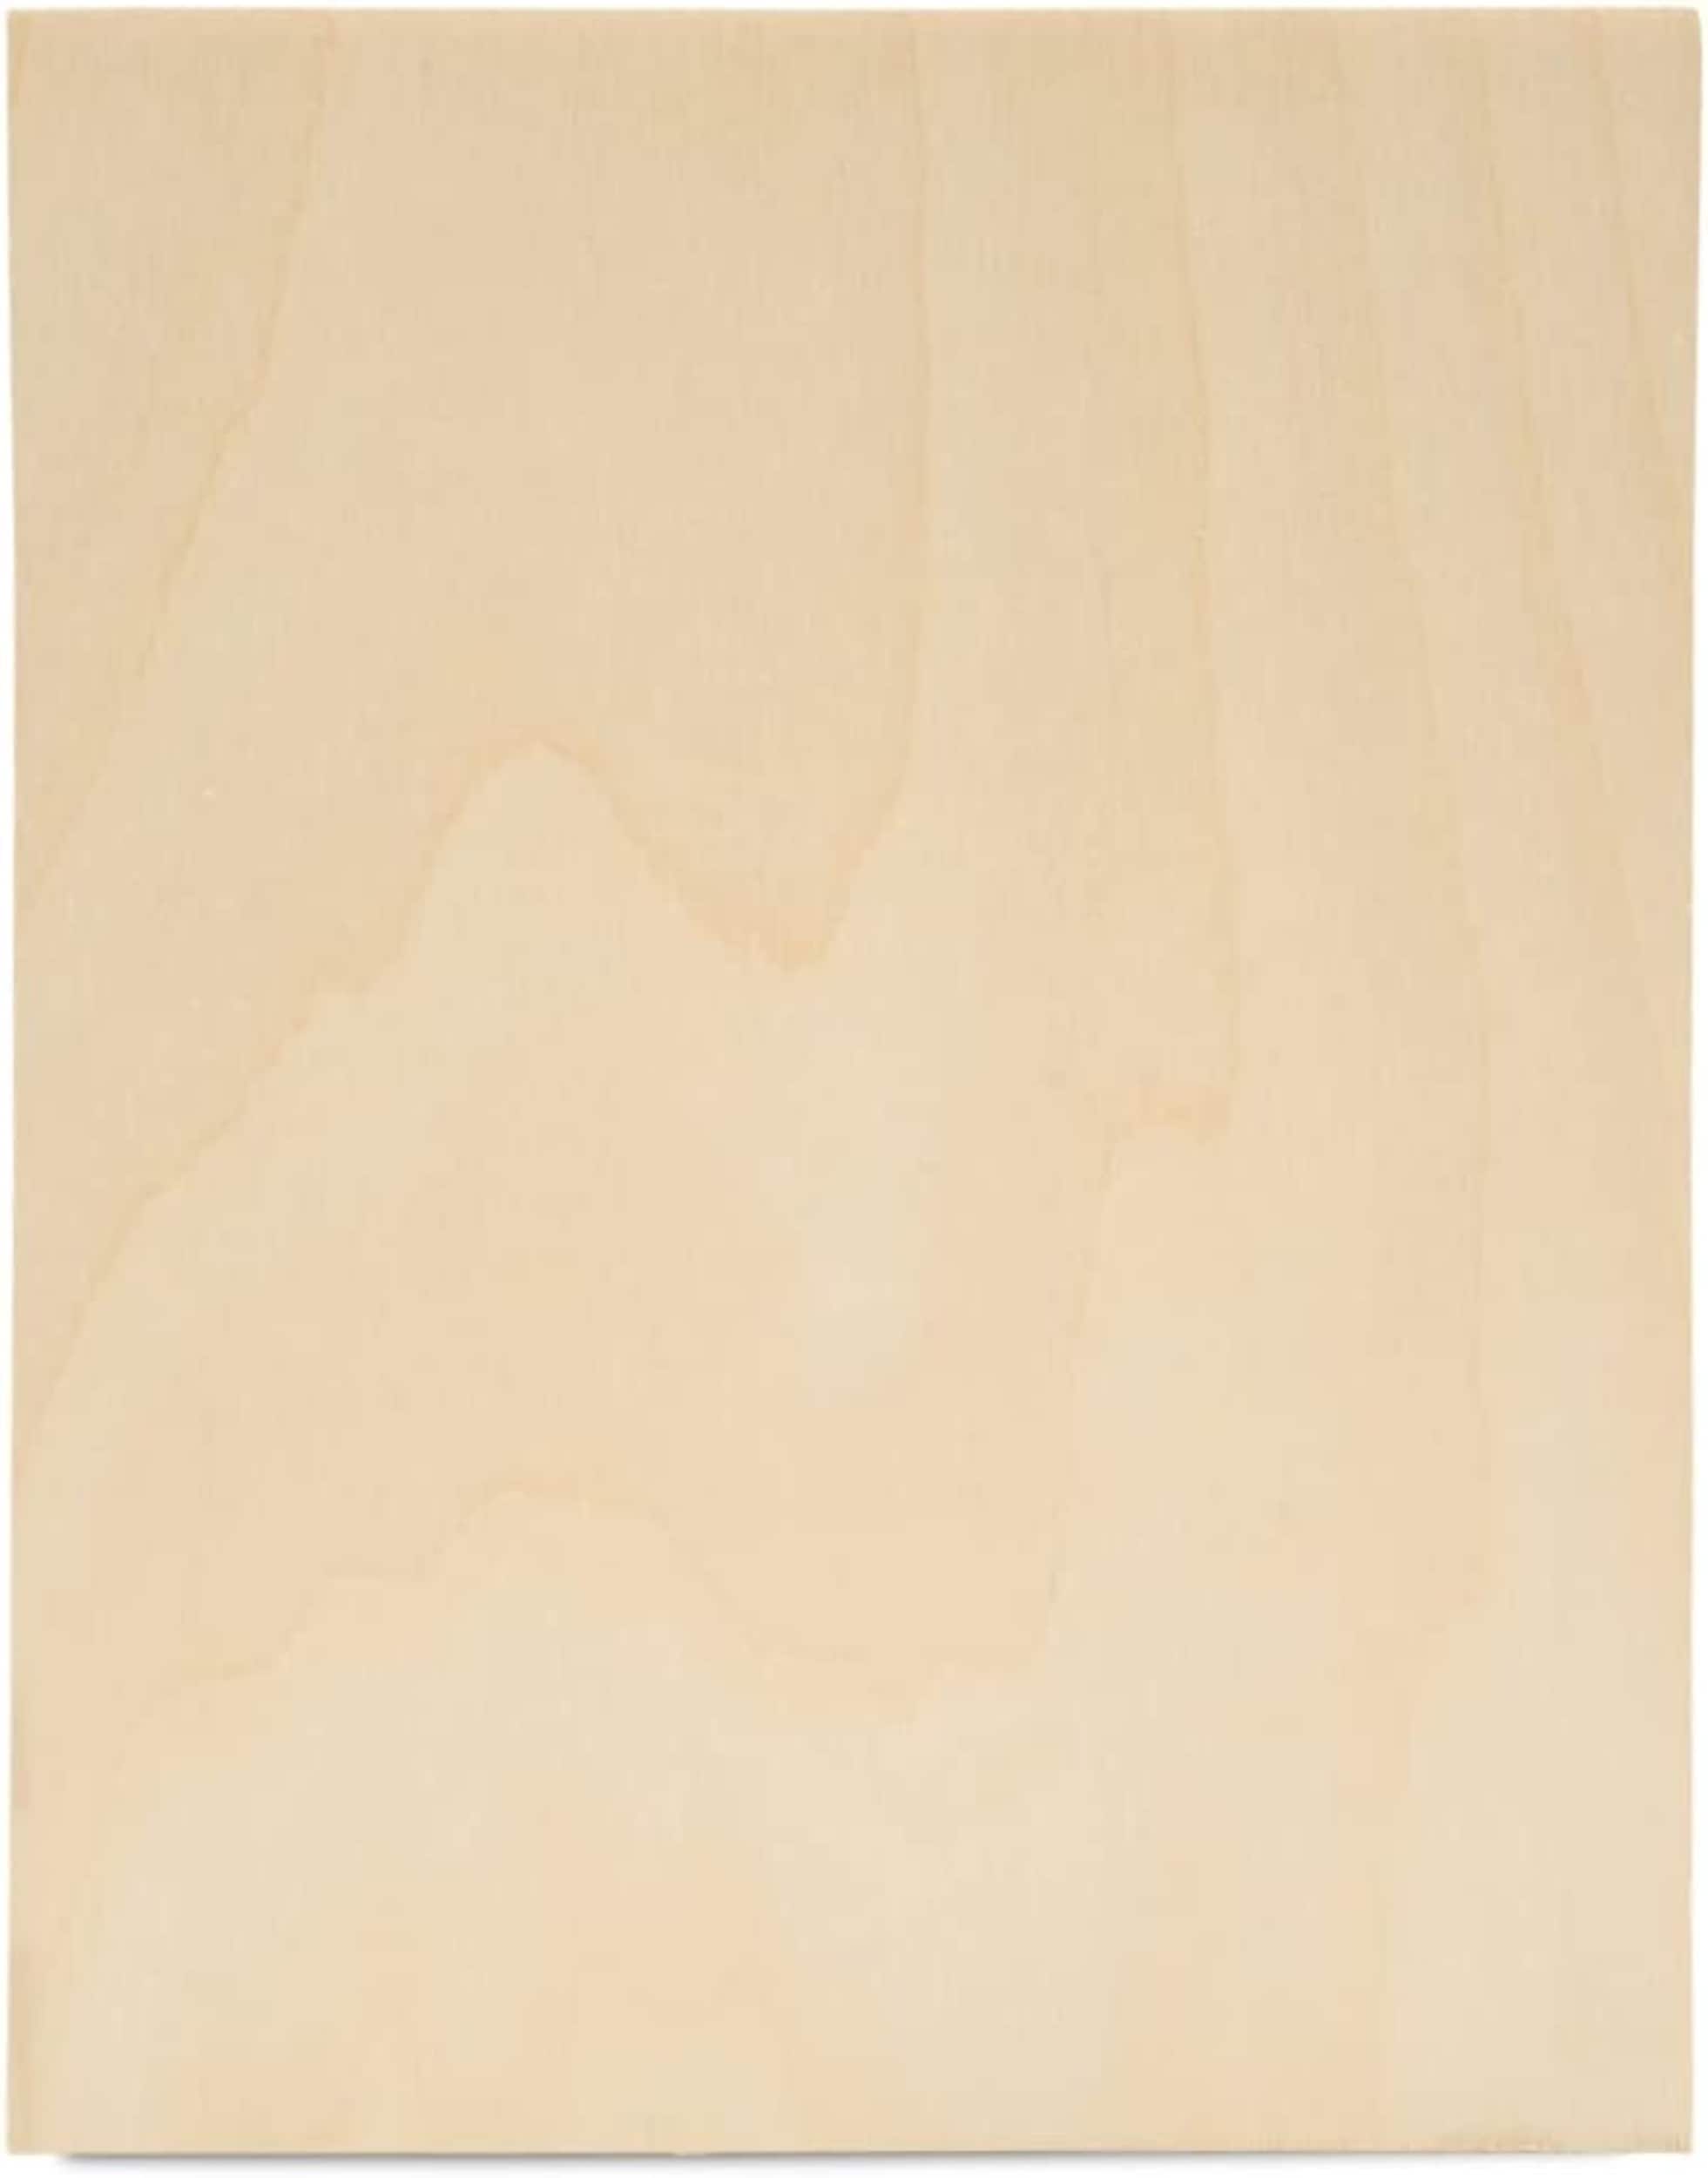 Painters Palette Wood Cutout - Medium 8 x 4.75 1/4 Baltic Birch Plywood